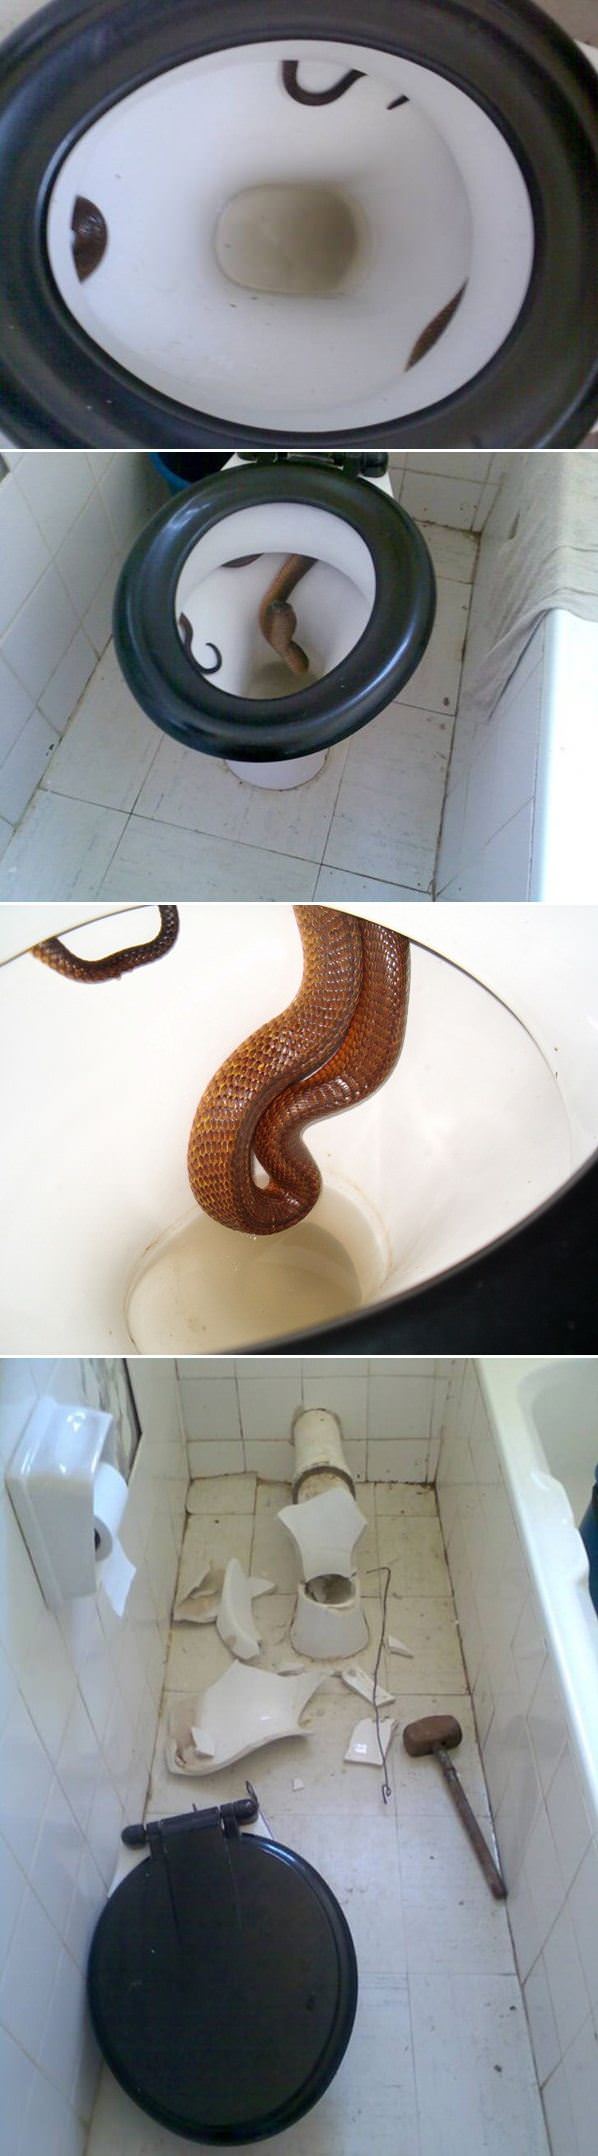 Snake In The Toilet